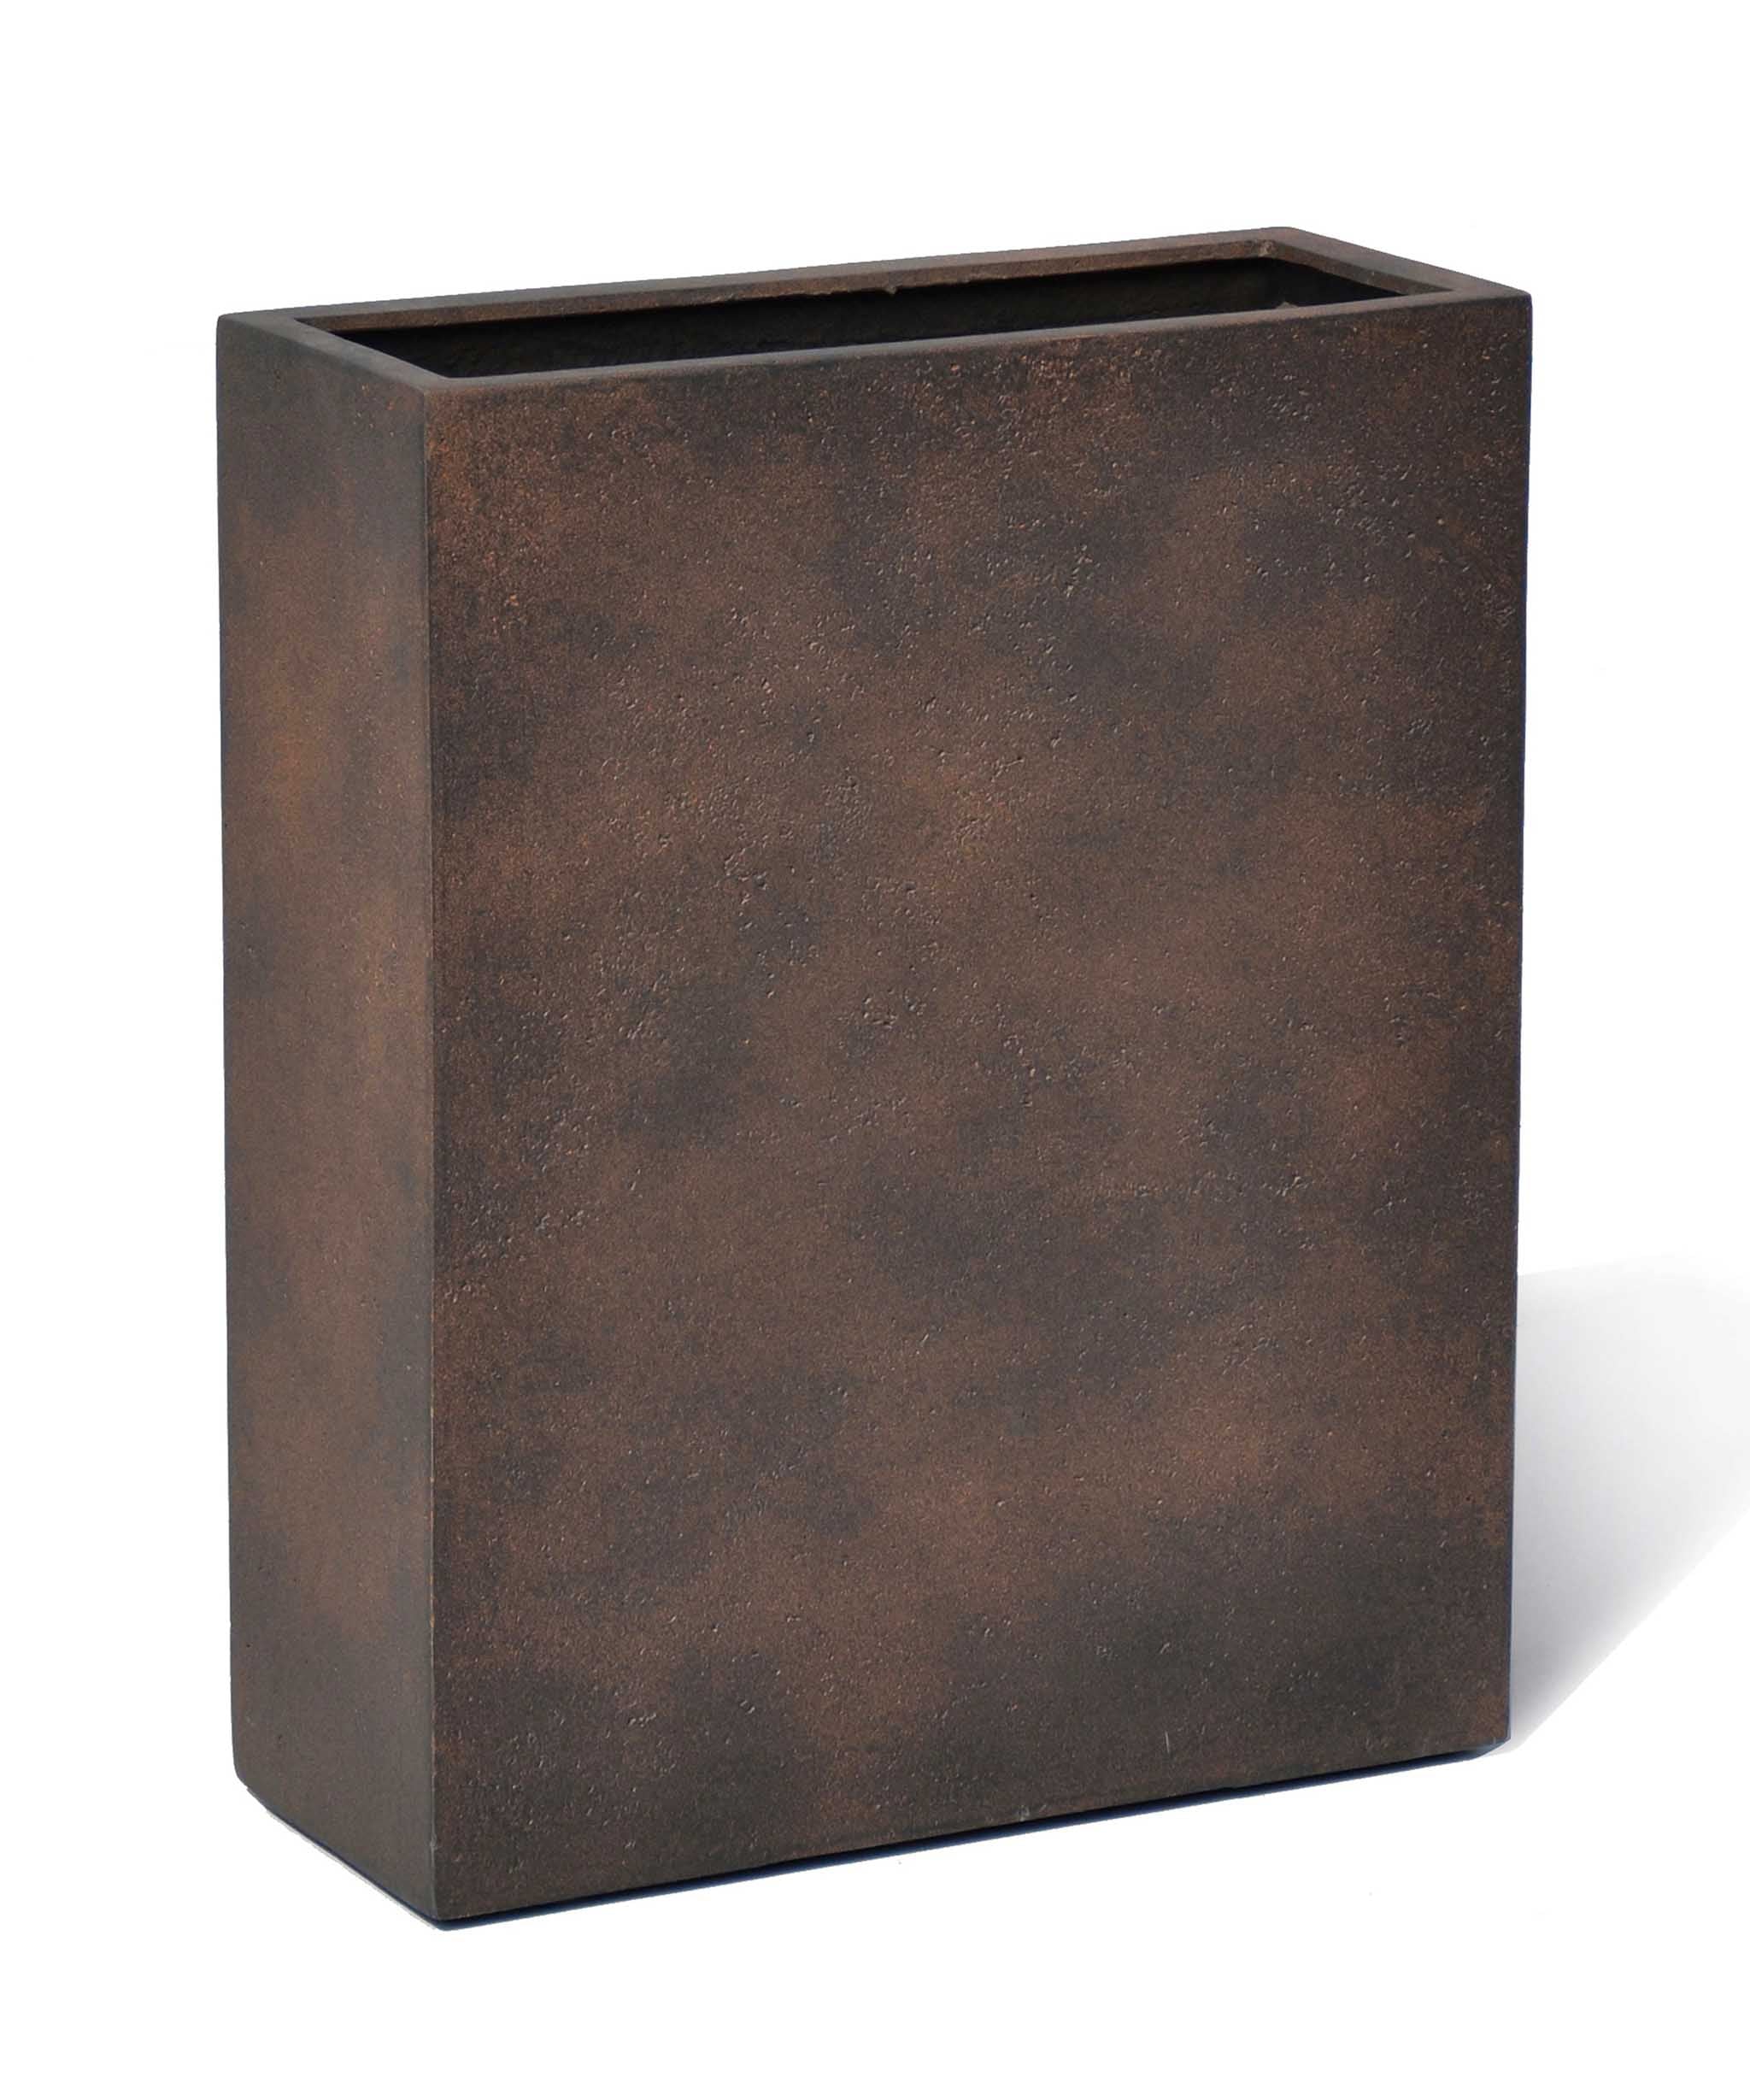 High Box | Loft Collection | Rust Brown